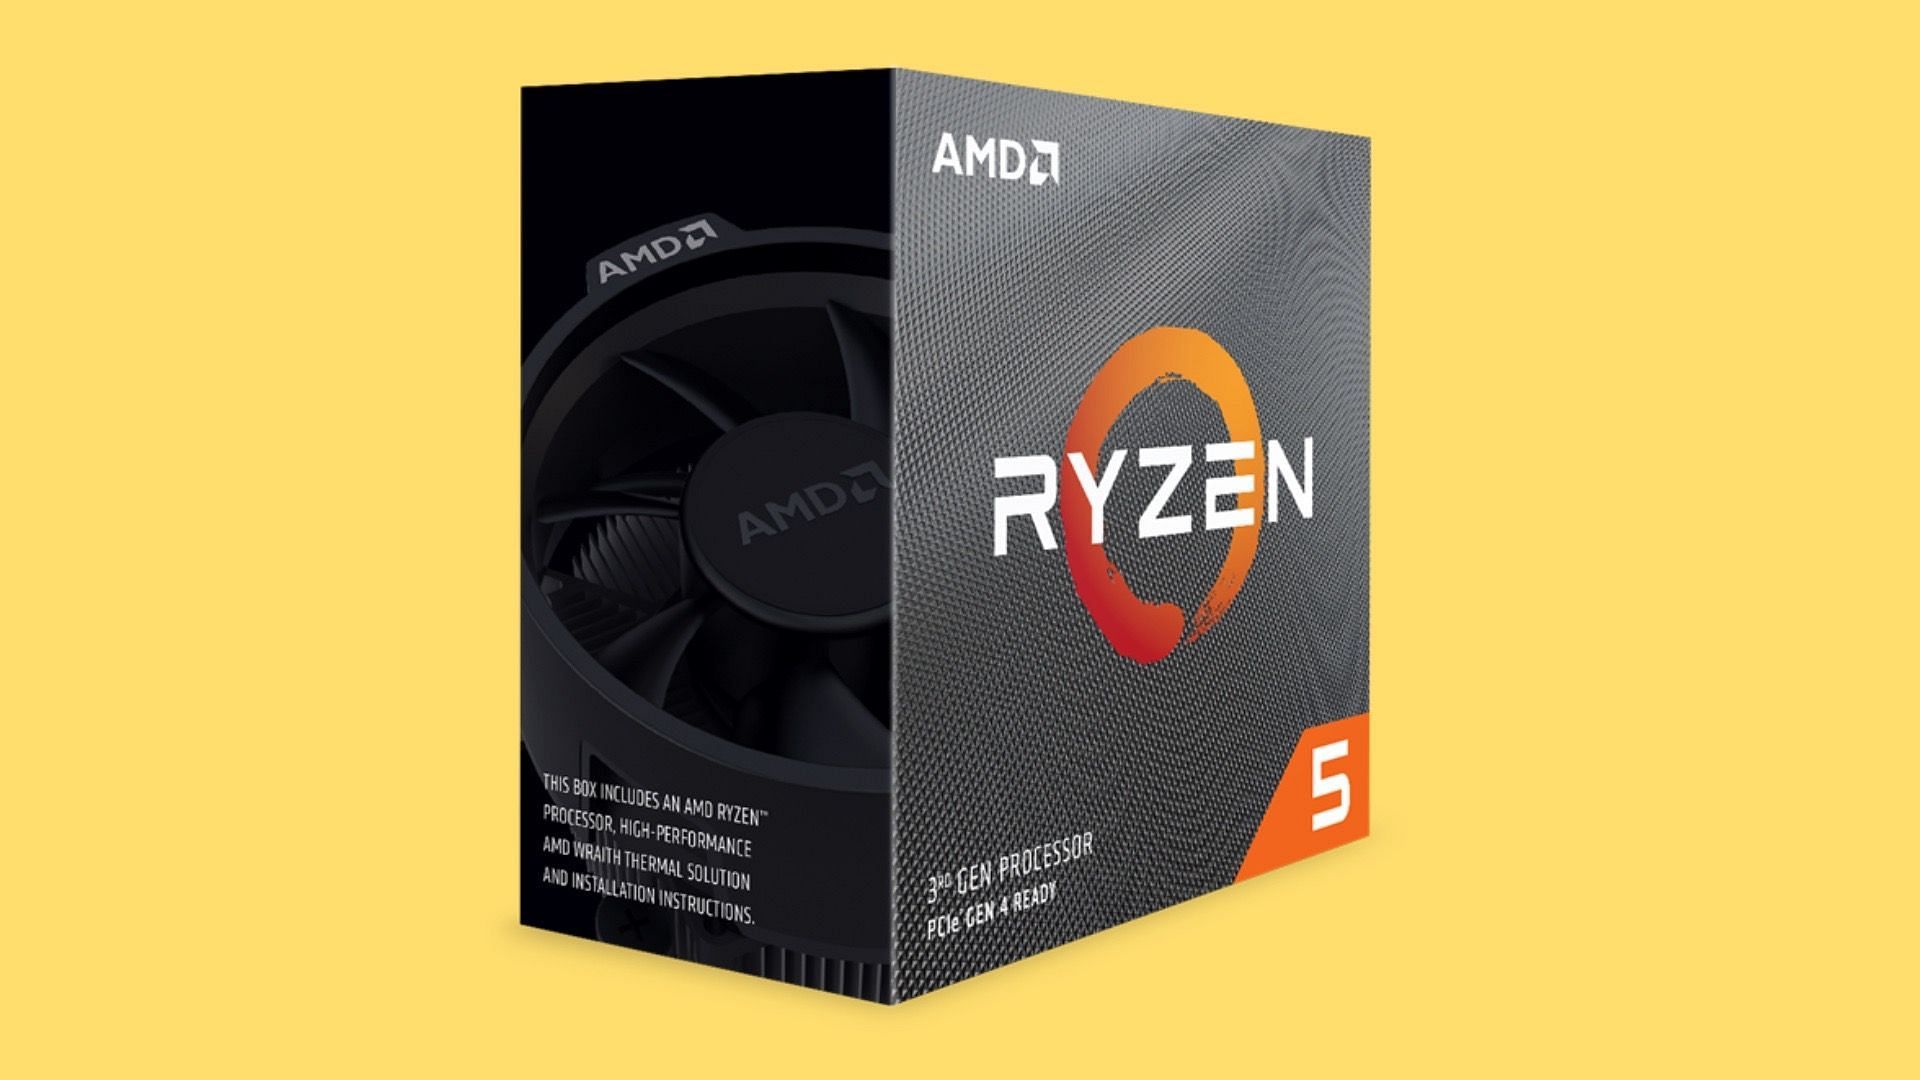 The Ryzen 5 3600 is making strides (Image via AMD)